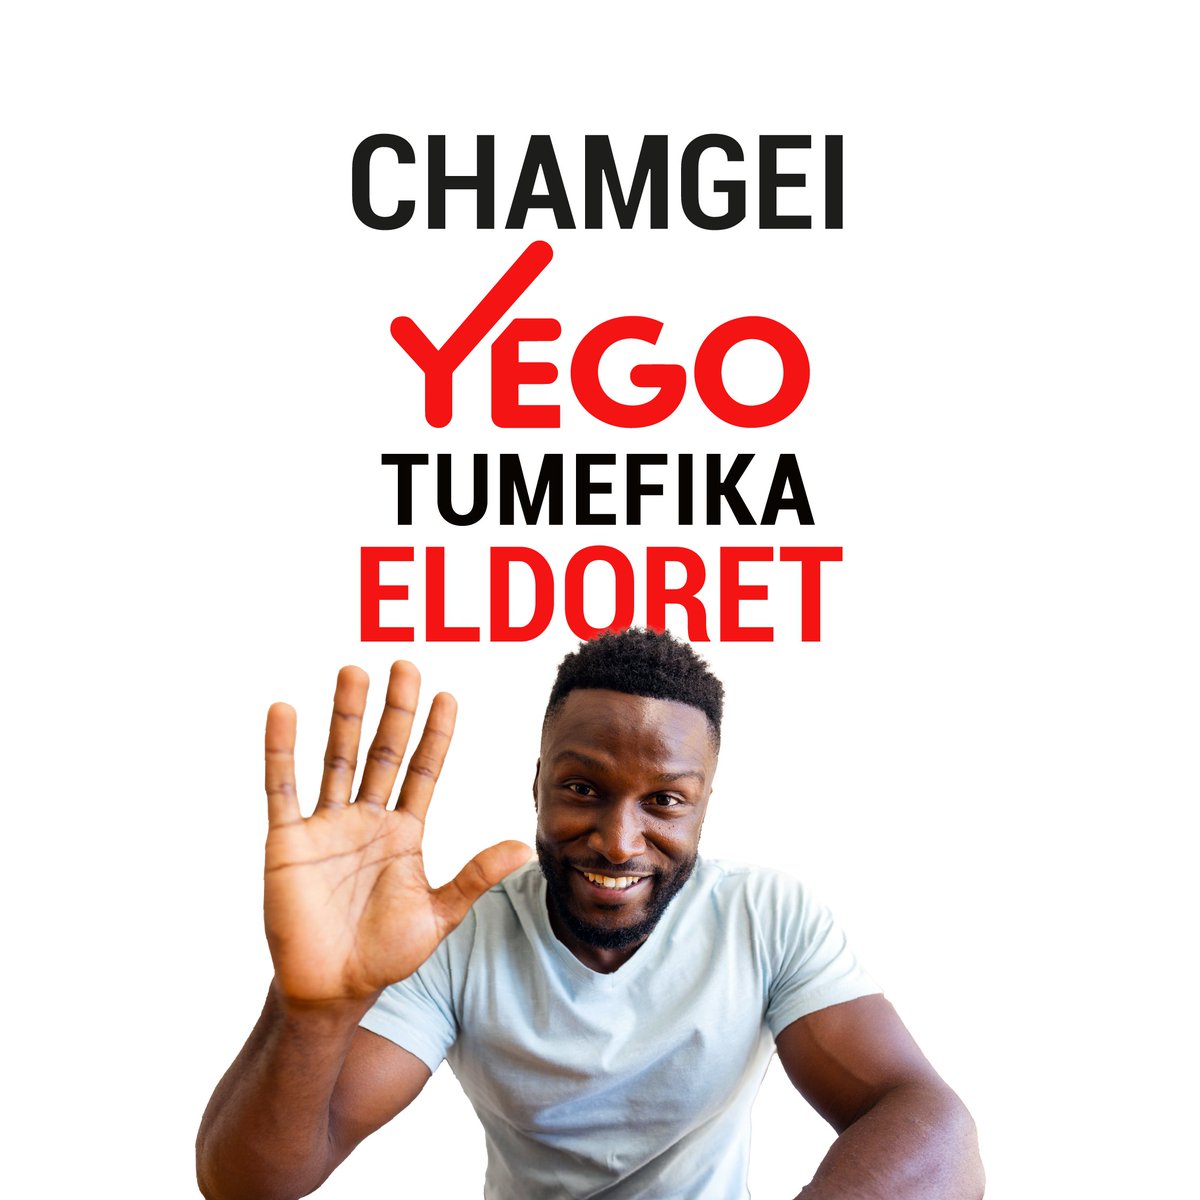 Use the YEGO Taxi App, Pair Ride, or Call 0730818181 to book NOW!
yegoglobal.com/ke/ride/getapp

#RideYego #YegoKenya #uasingishucounty